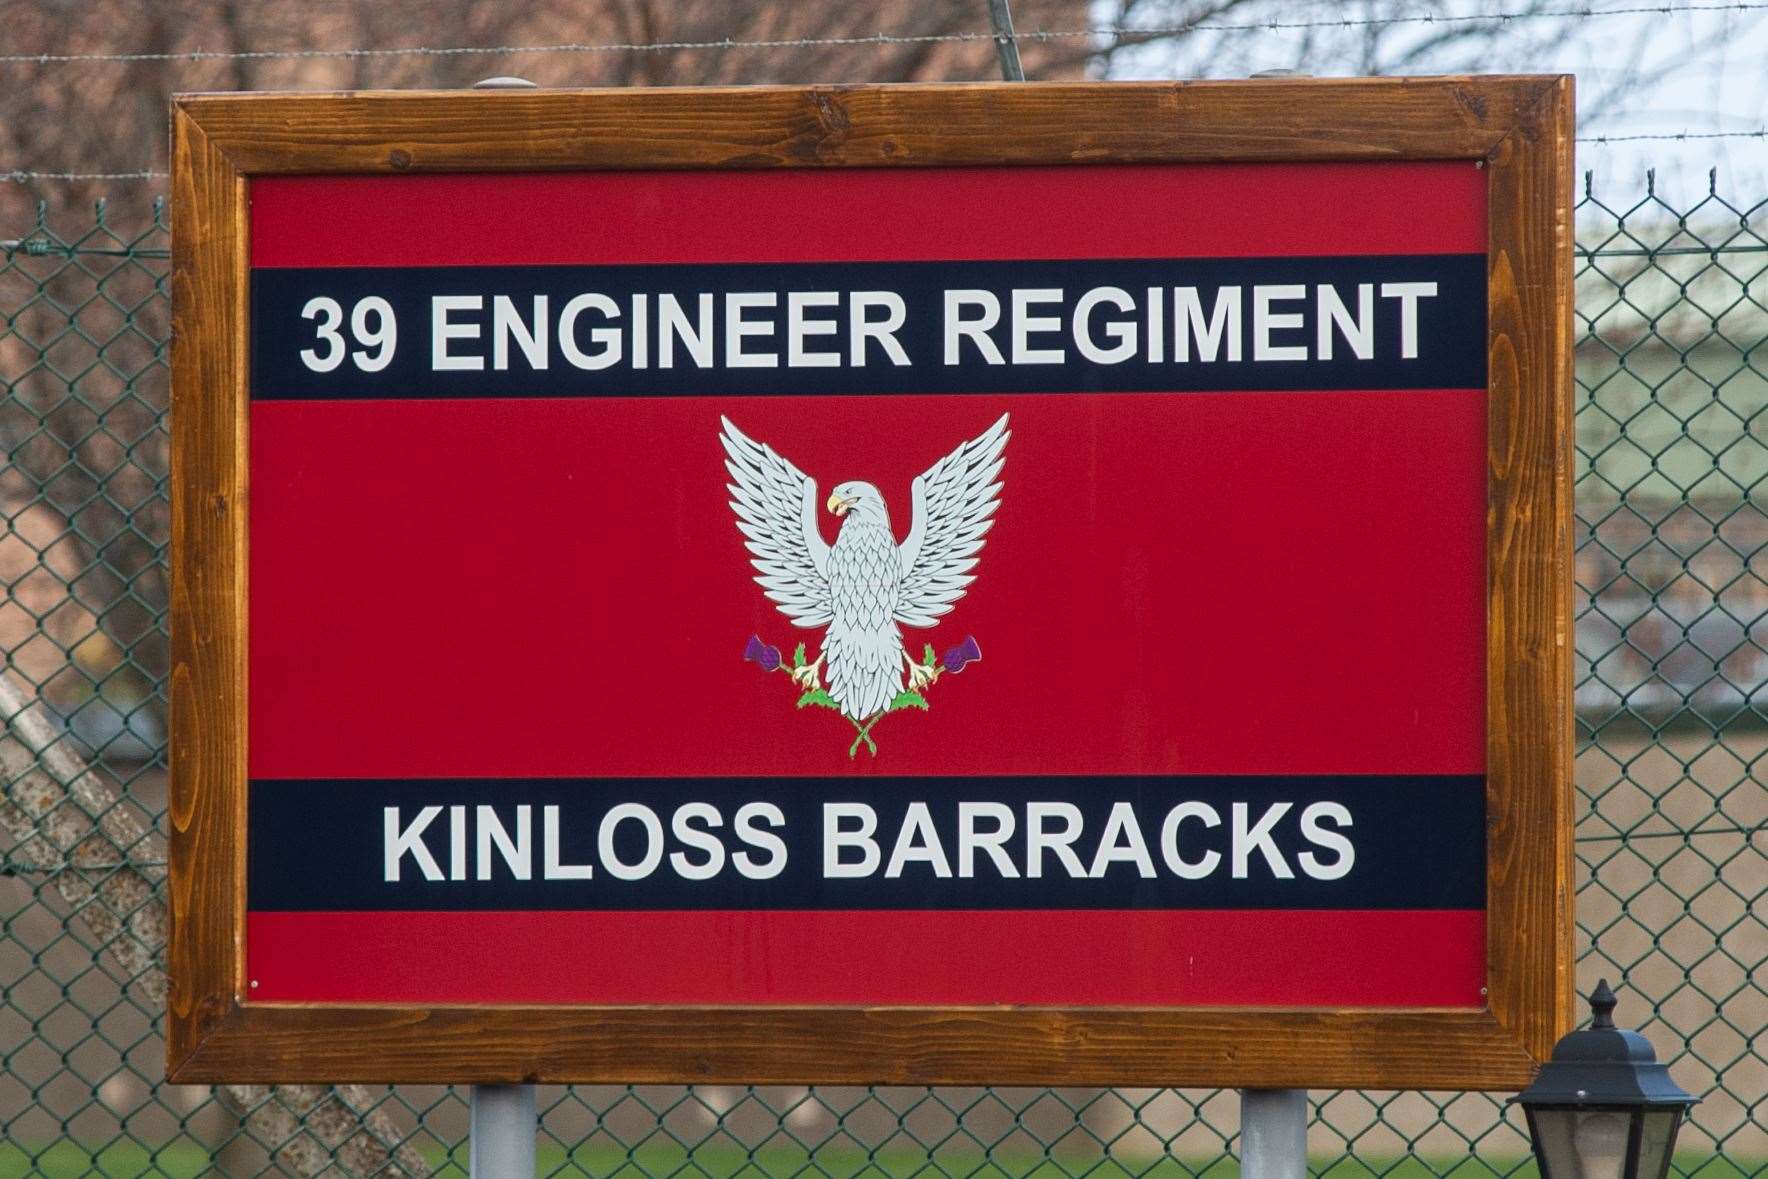 Kinloss Barracks, home to 39 Engineer Regiment. Picture: Daniel Forsyth.